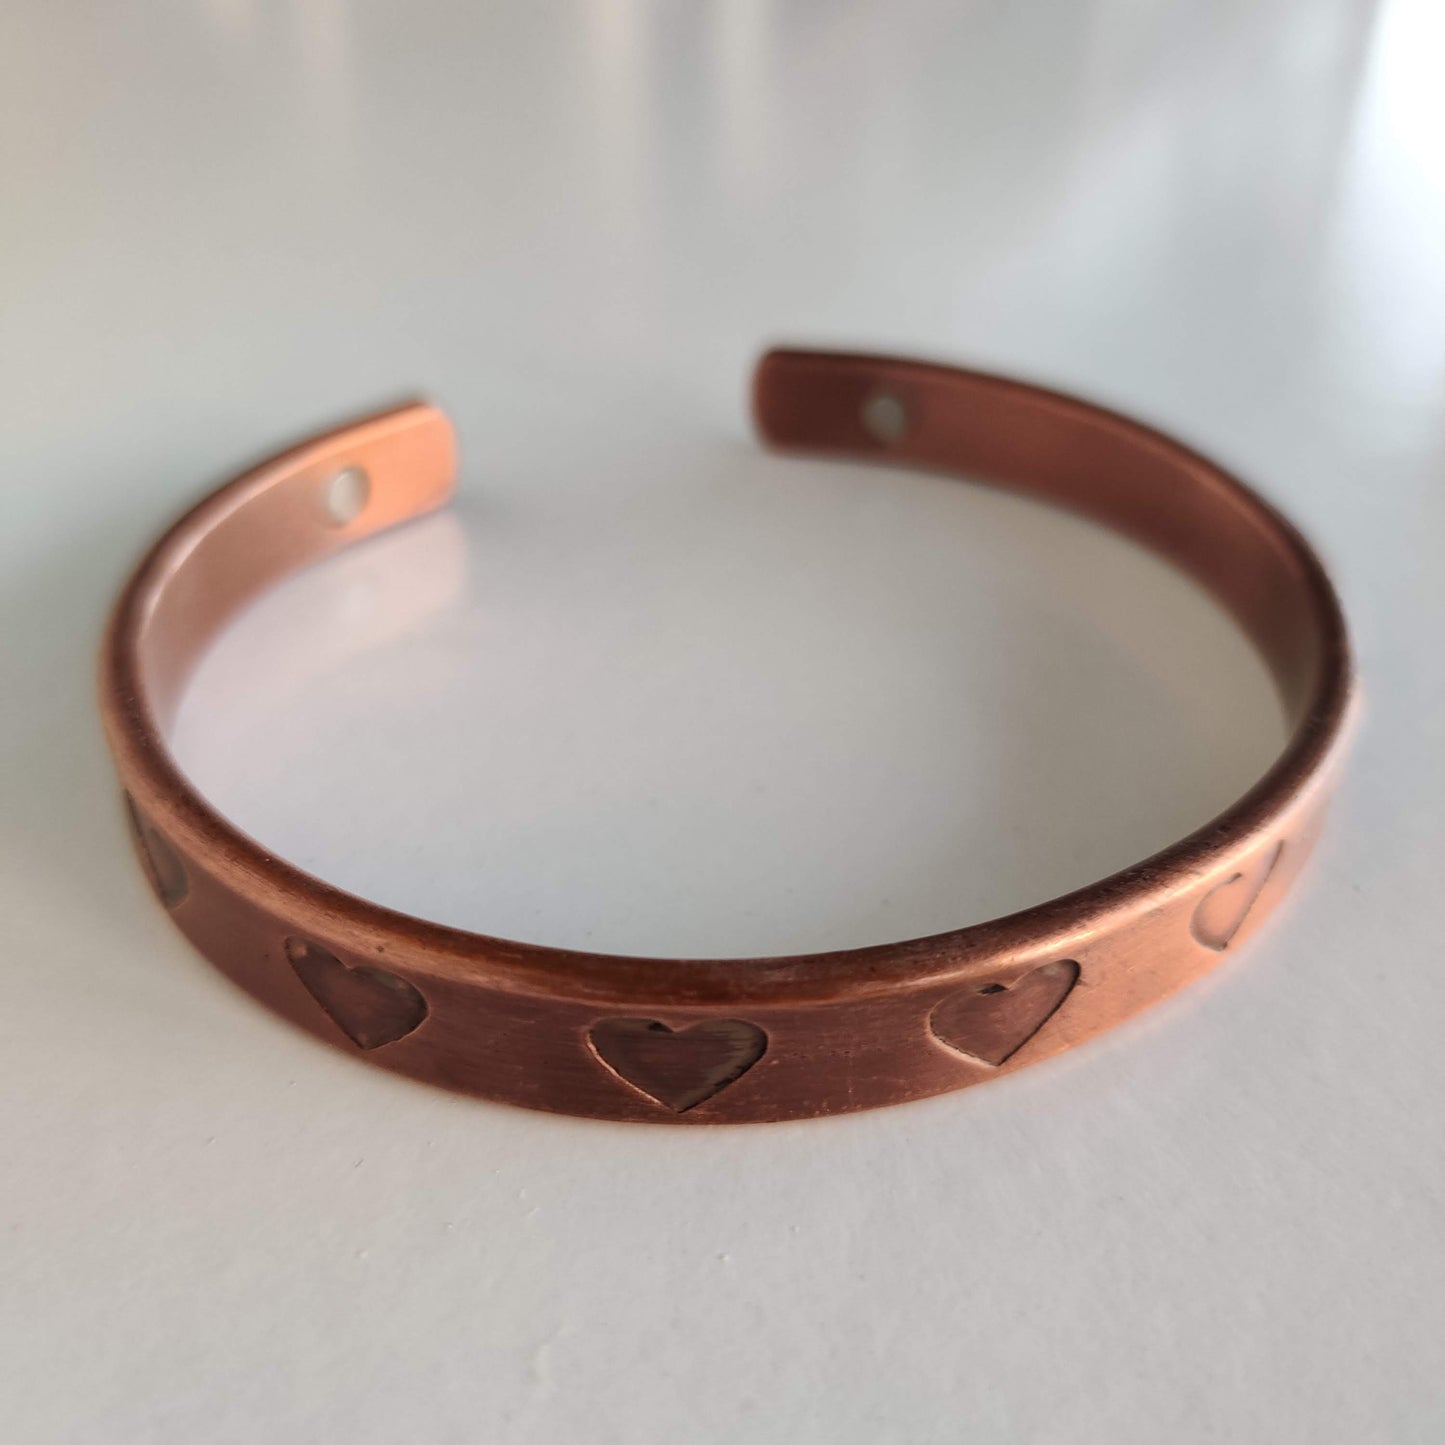 Copper Magnetic Bracelet with Hearts - Rivendell Shop